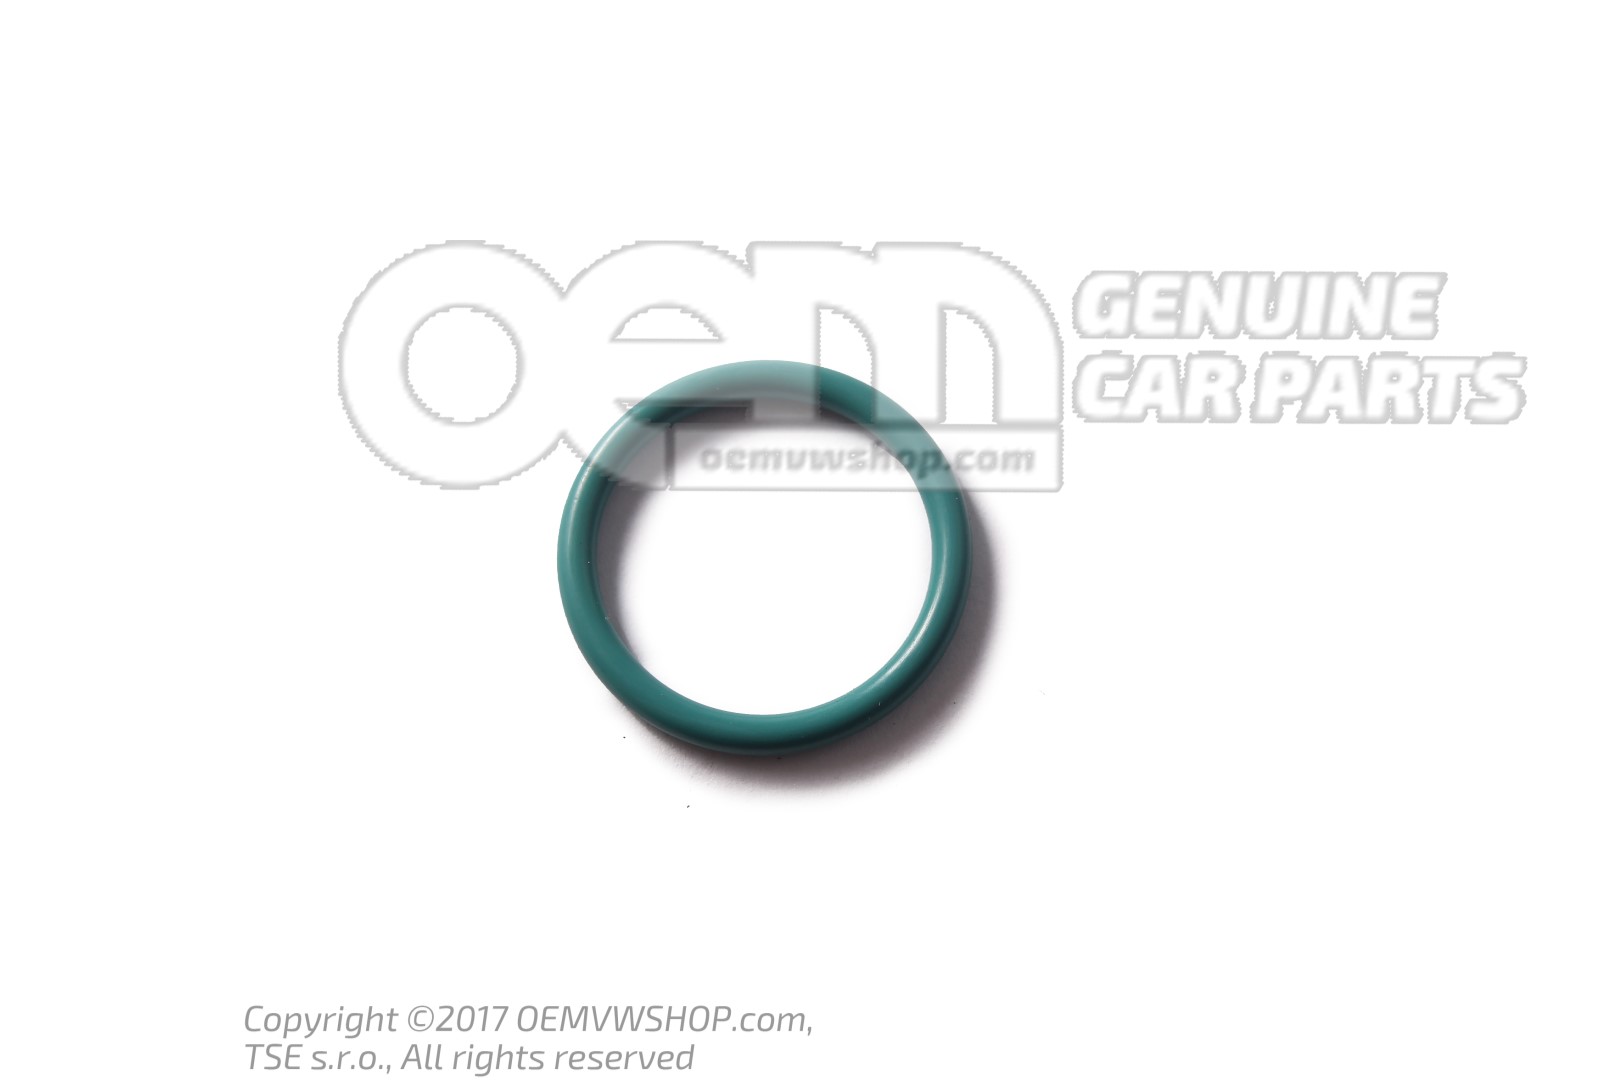 Size : ID3.63x2.62mm TMP1105 O-Rings CS2.62mm EPDM O Ring ID 1.24/2.06/2.84/3.63/4.42x2.62mm O-Ring Gasket Seal Exhaust Mount Rubber Insulator Grommet 100PCS ORING Gasket 